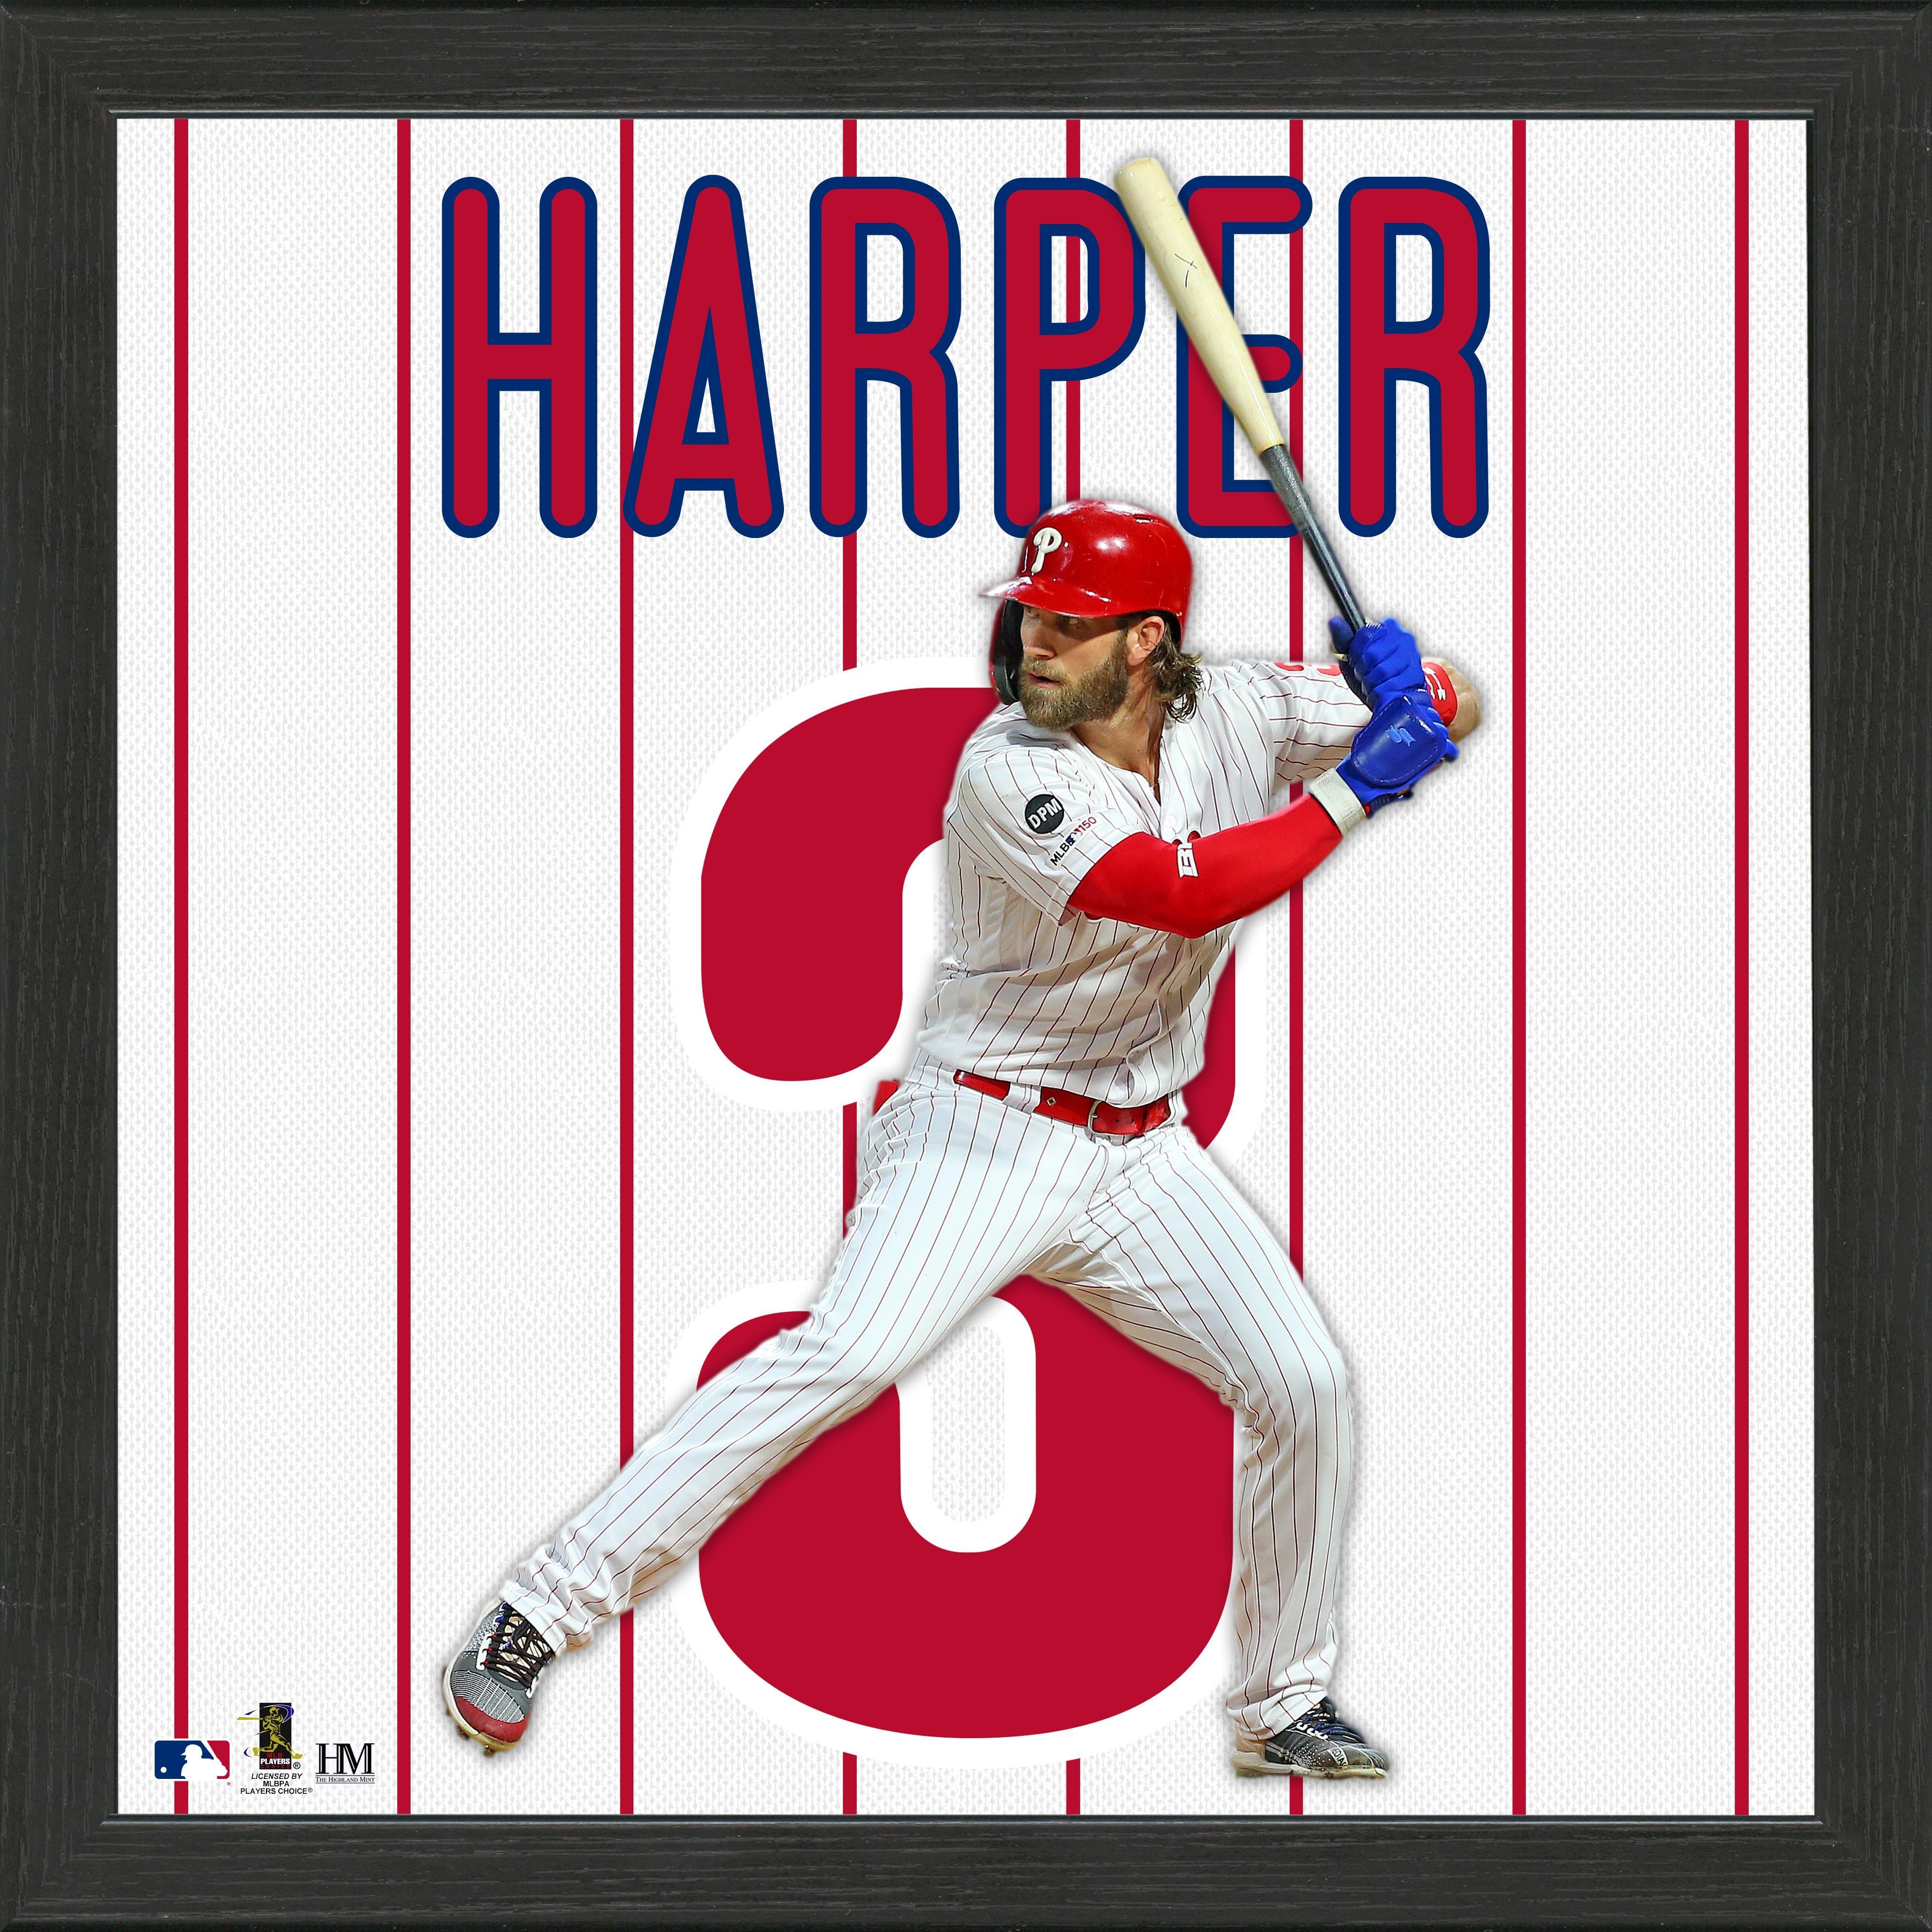 bryce harper baseball card value